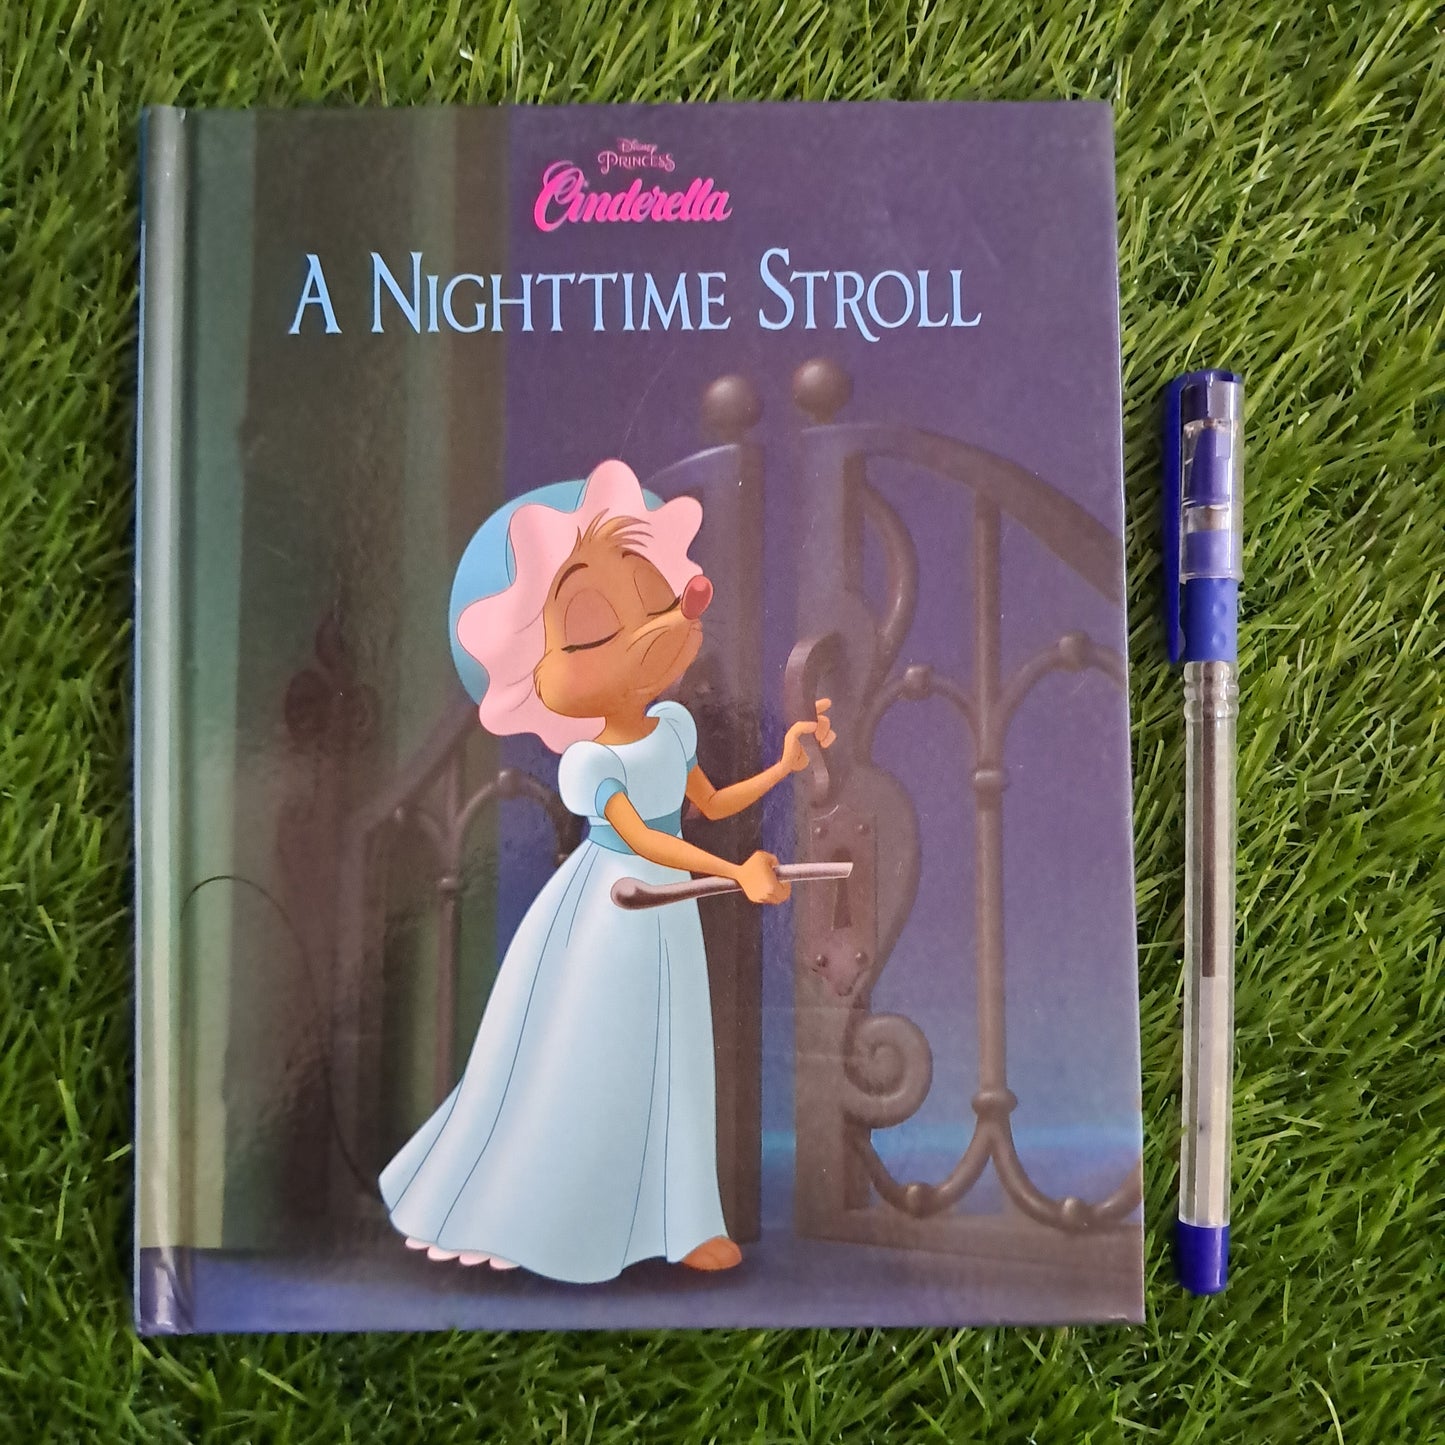 Disney Princess Cinderella A NIGHT TIME STROLL